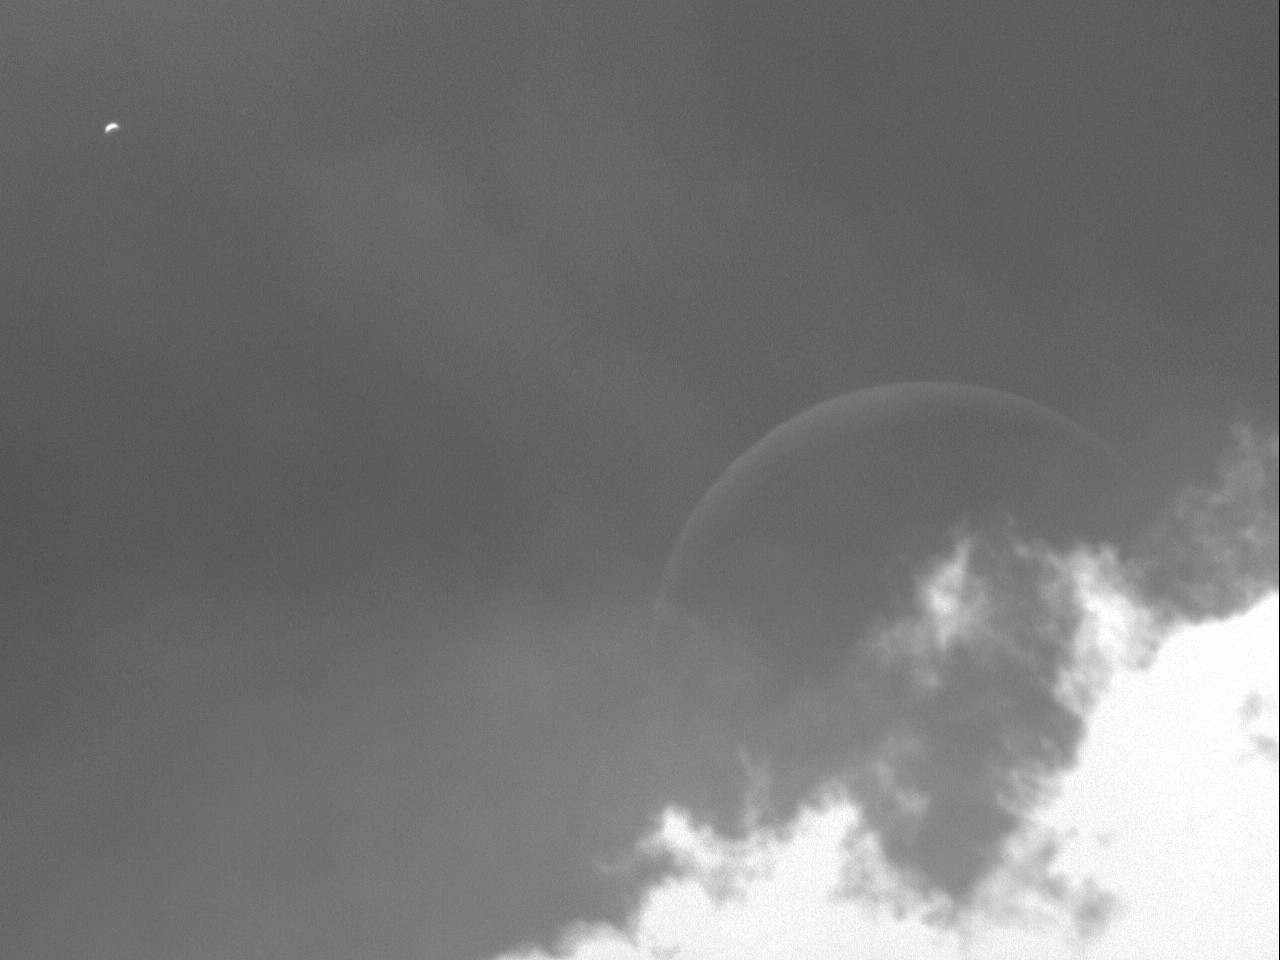 Mond und Venus um 15:54 MESZ